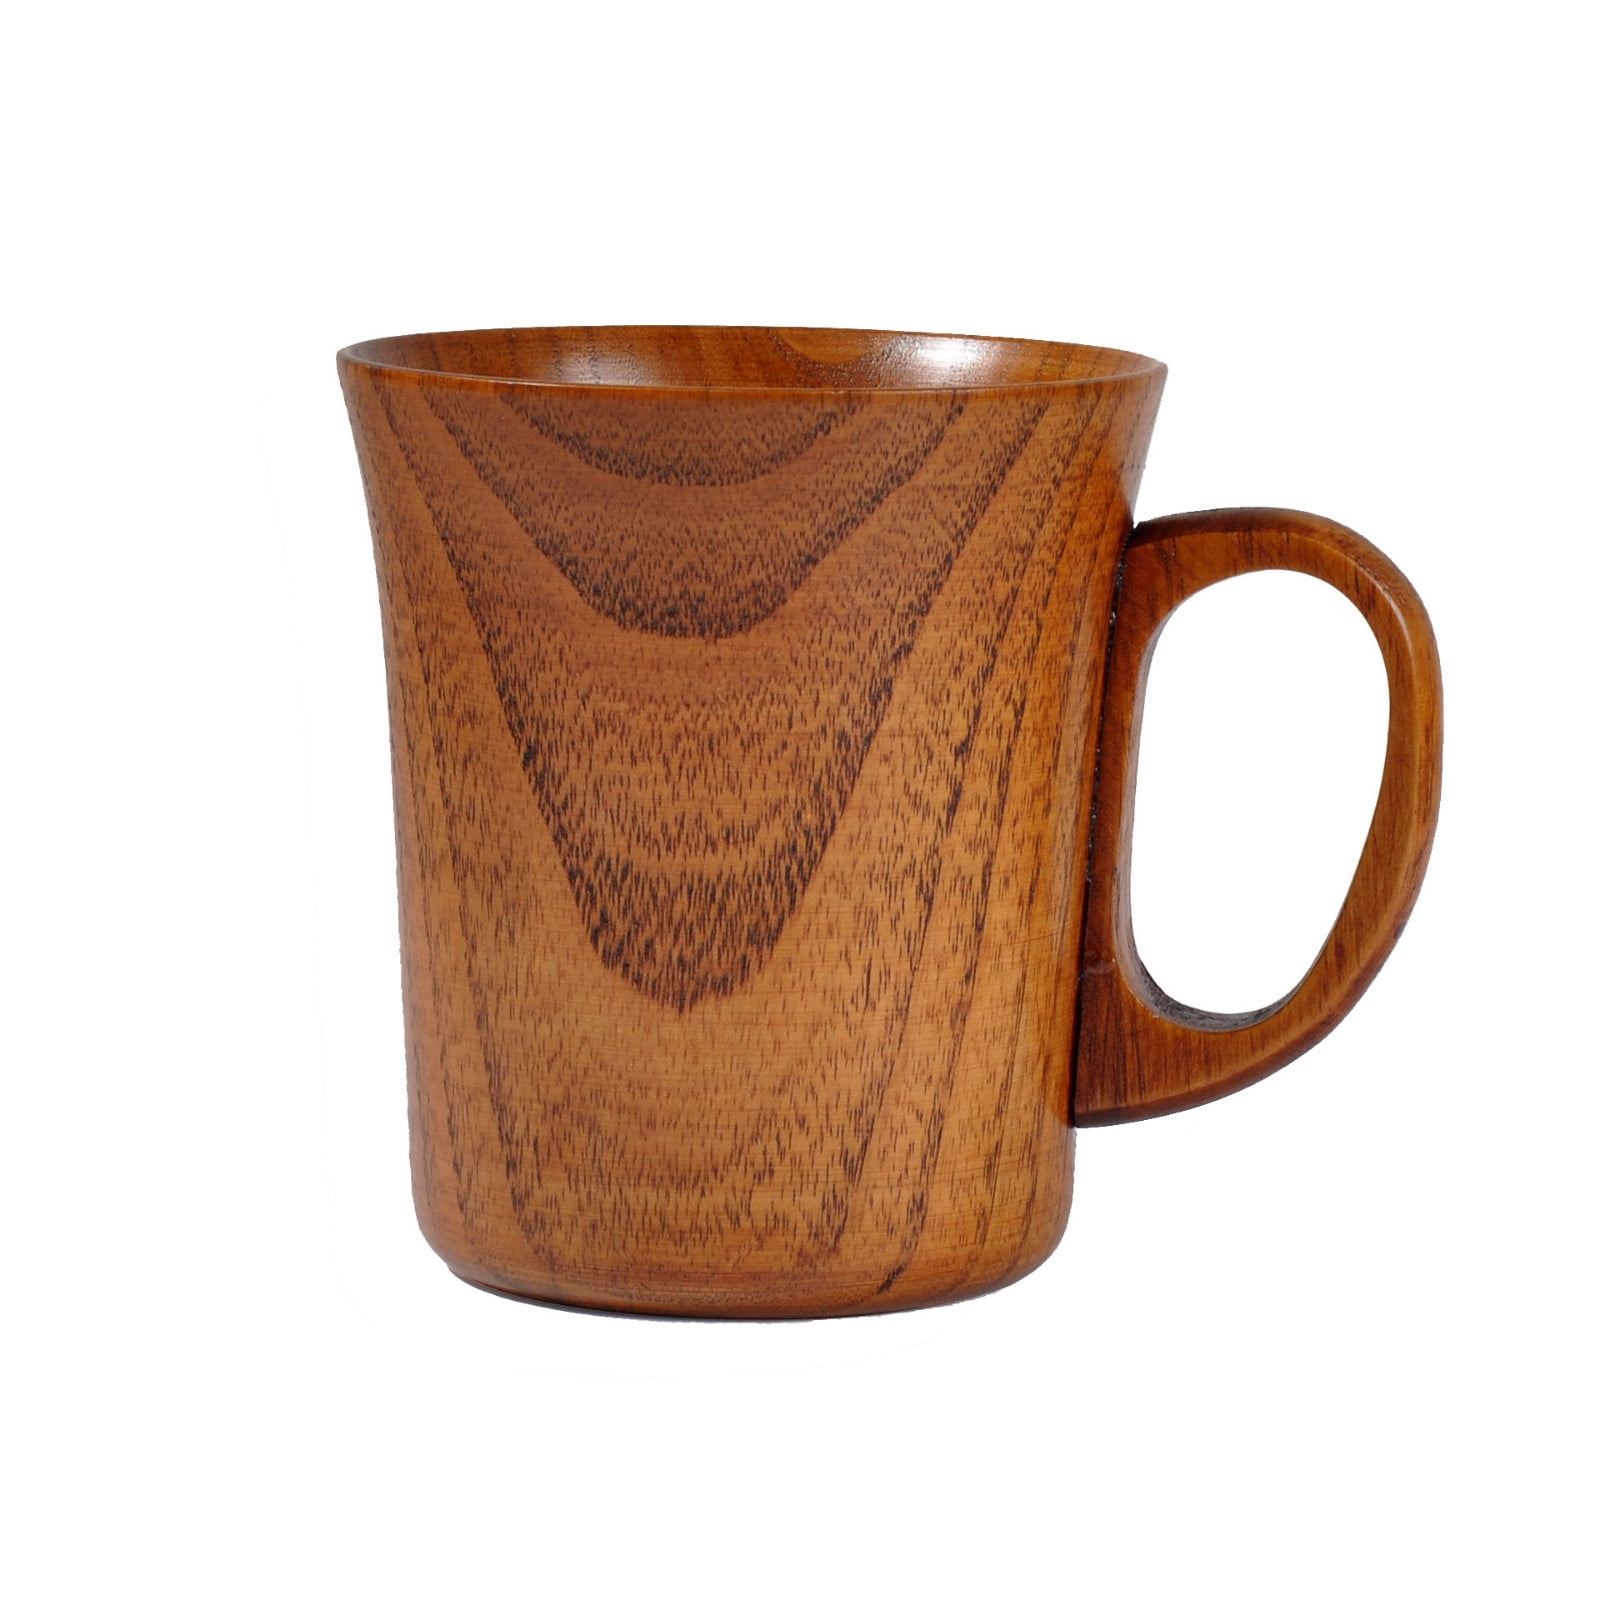 Juice Cup Tea Cup Beer Cup Natural Wood Cup Cup Handmade Mug 